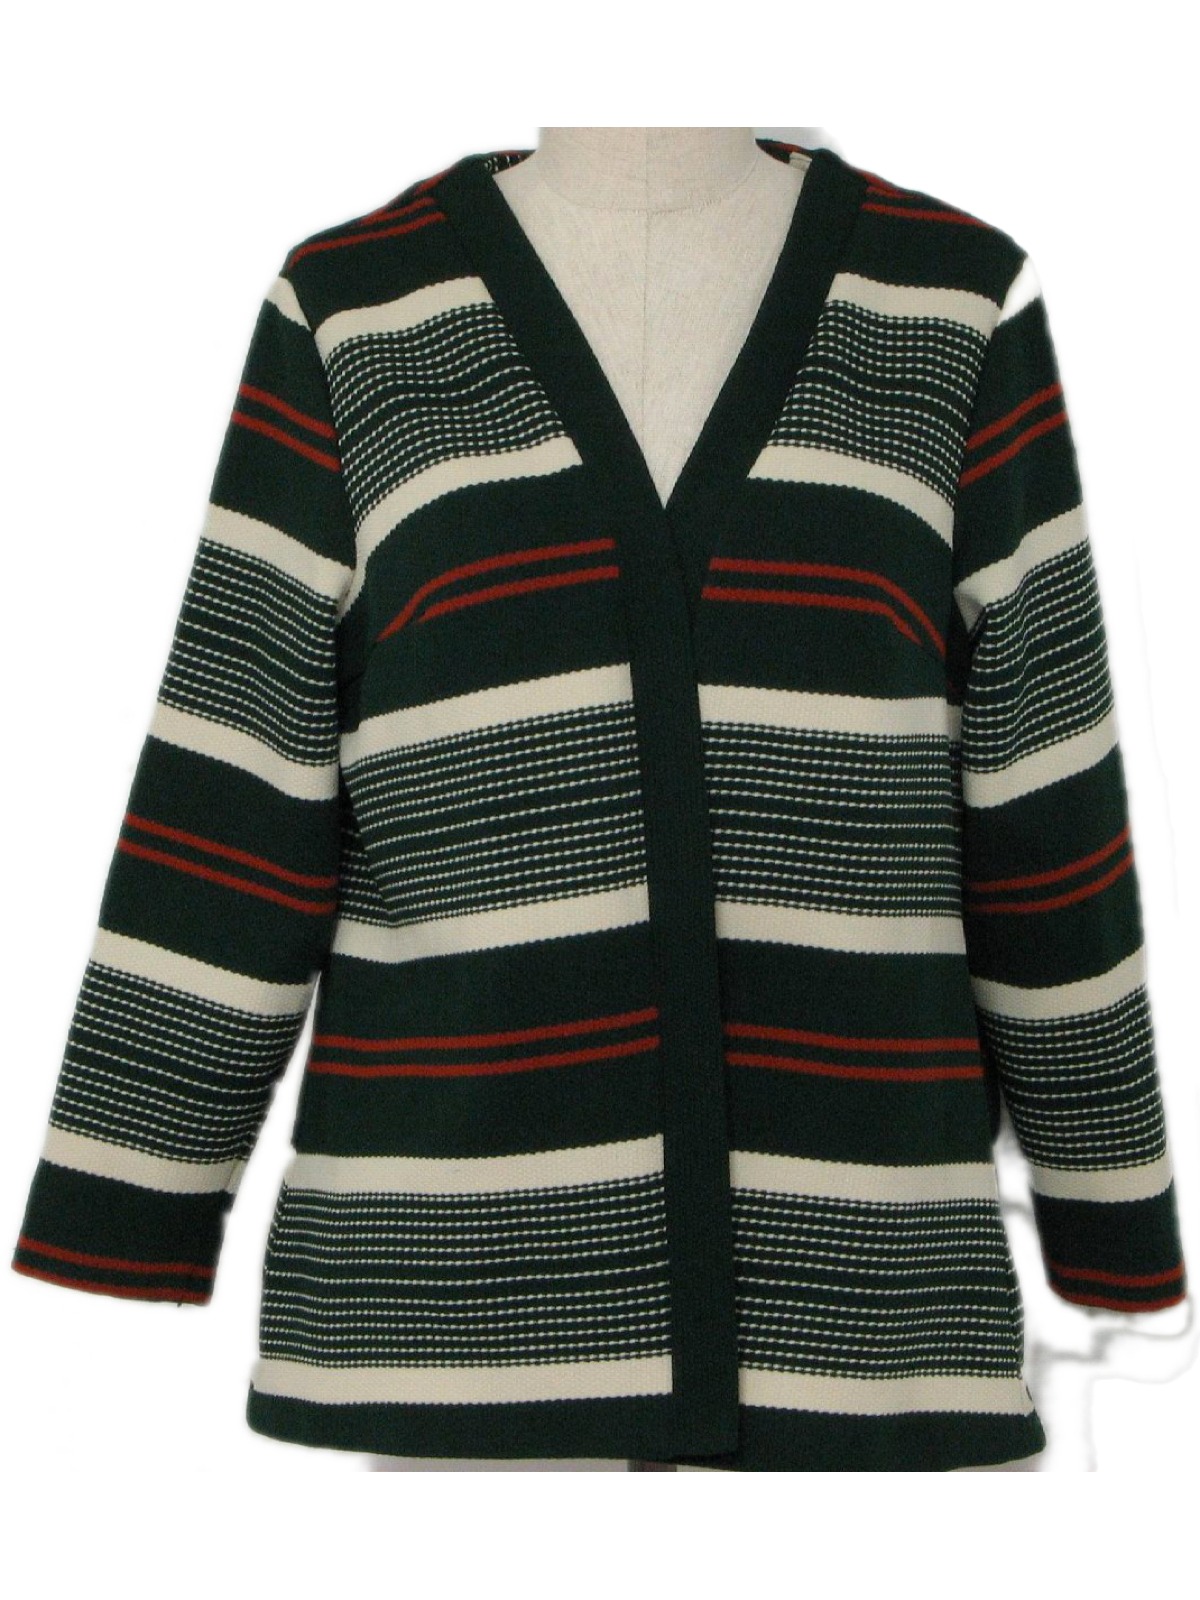 Retro 70's Caridgan Sweater: 70s -Missing Label- Womens green, cream ...